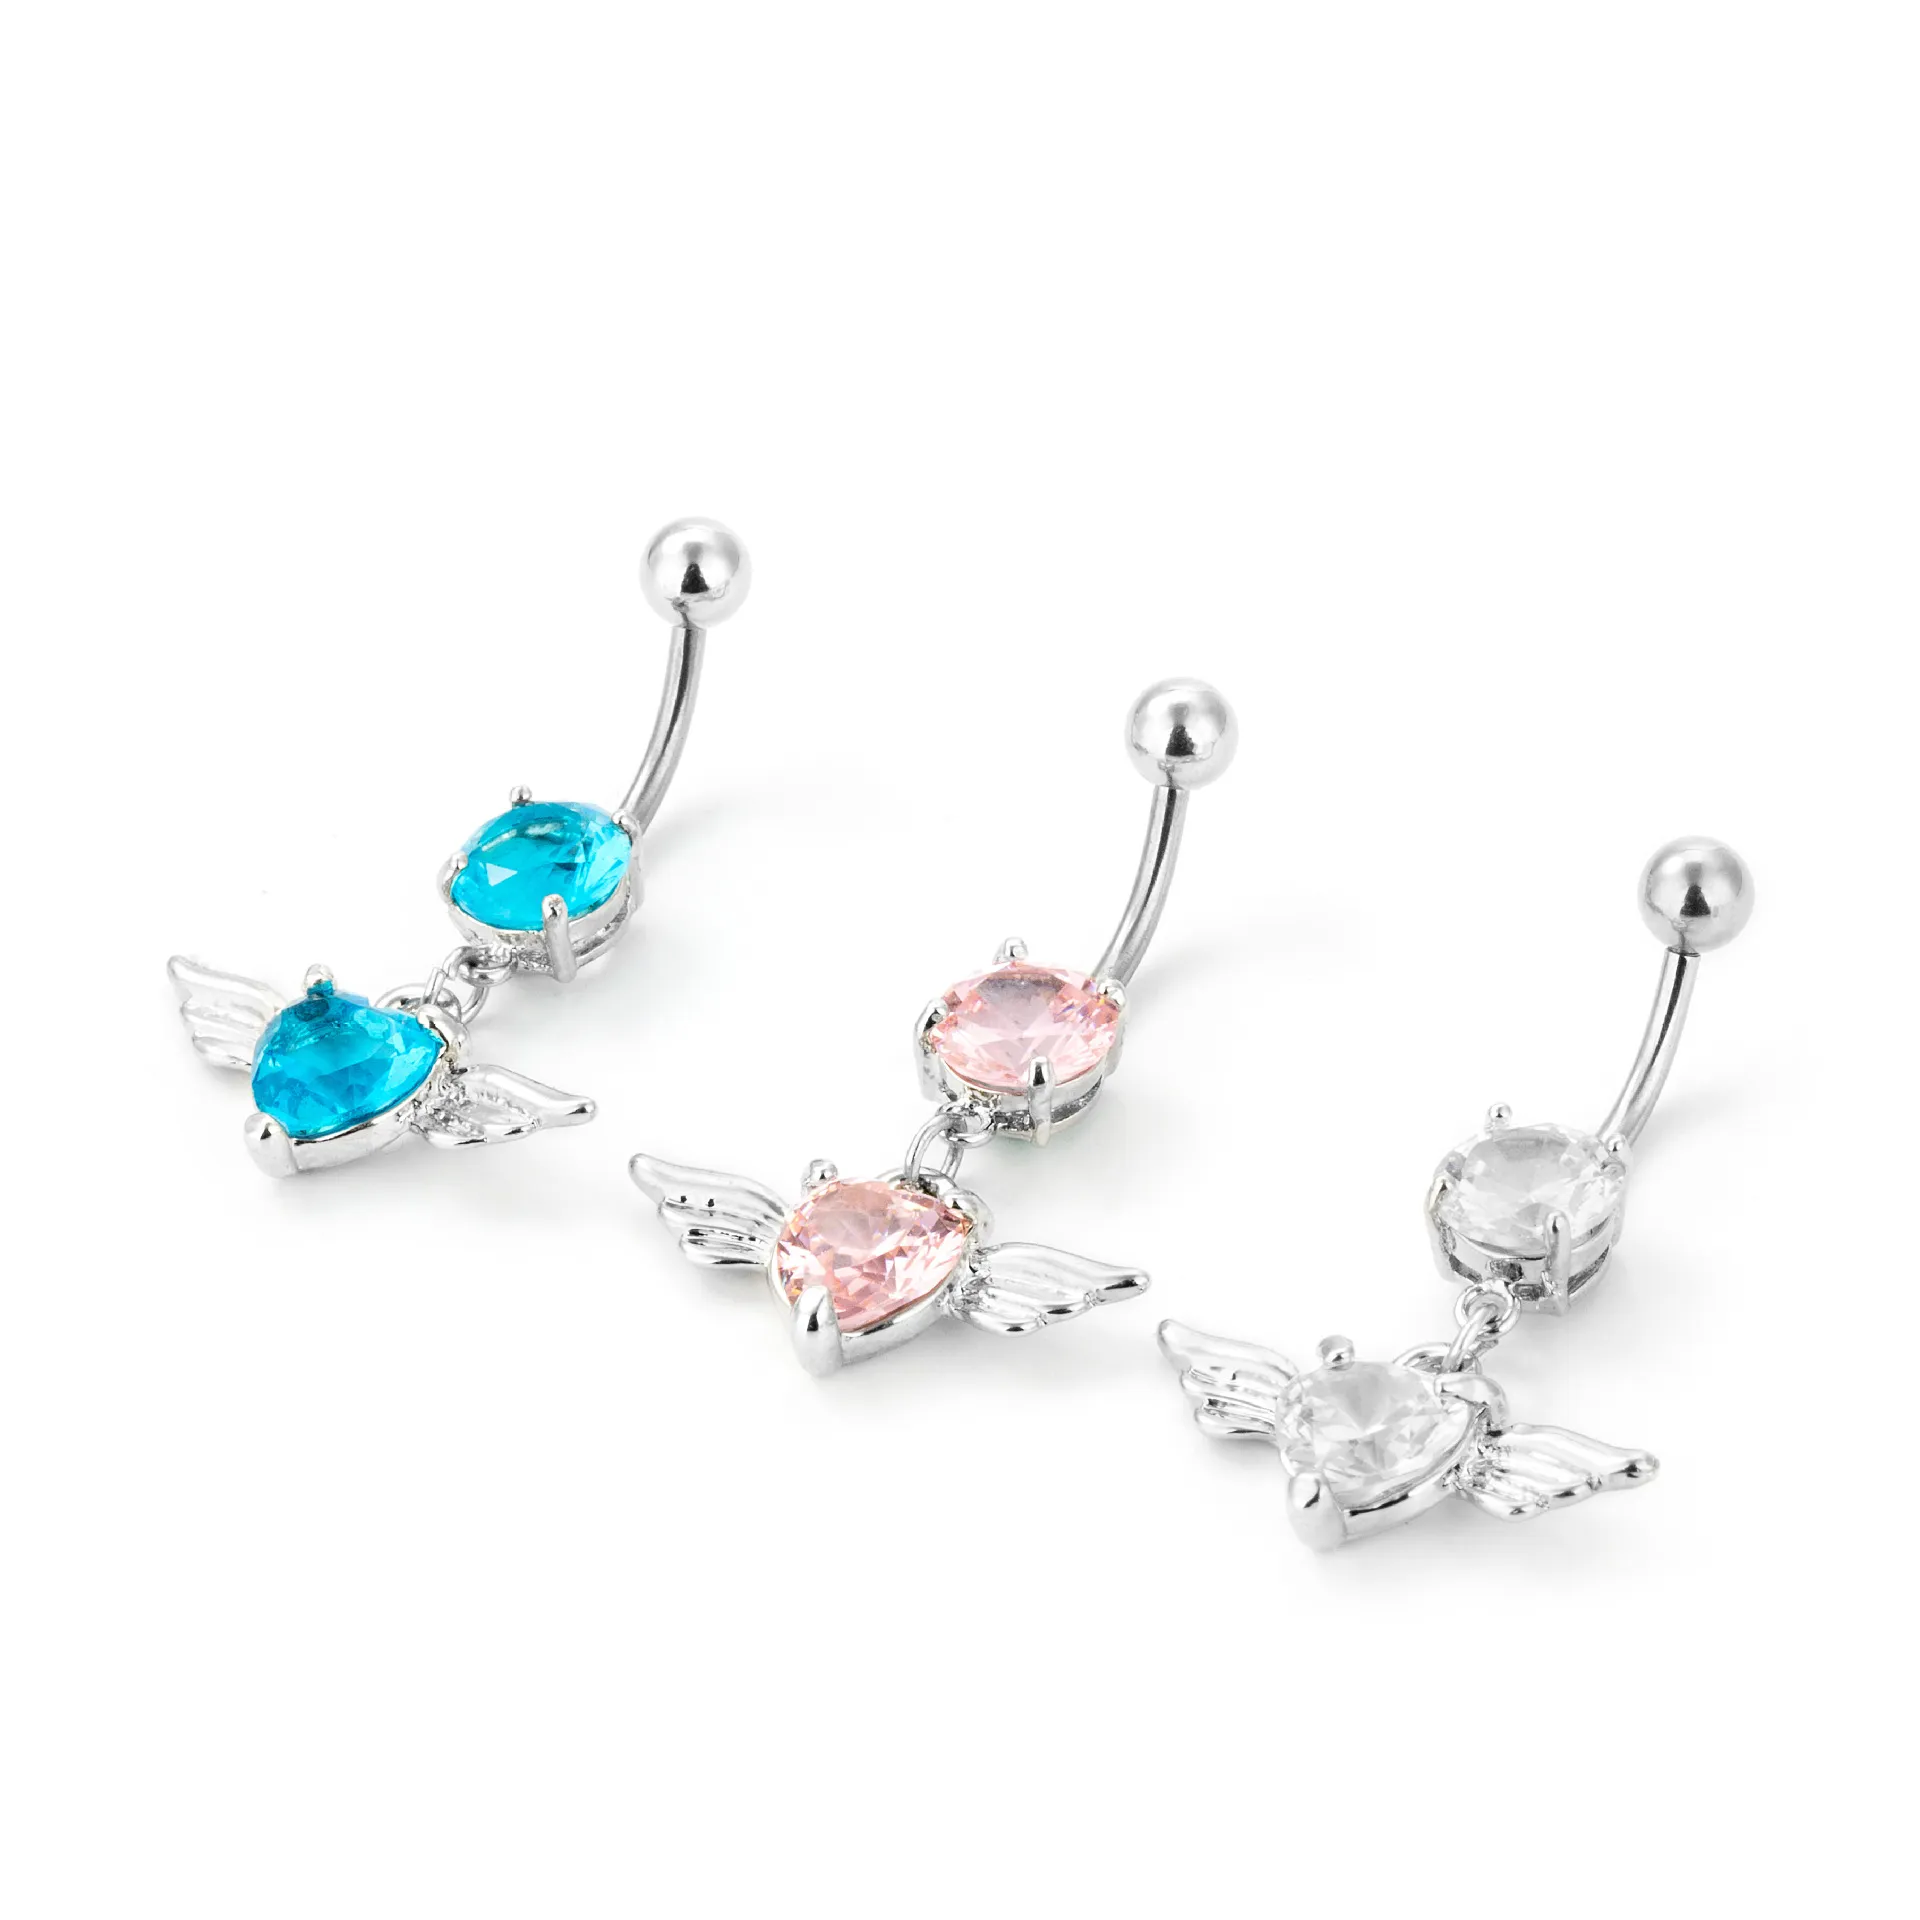 Piercing doble corazón colgante anillo ombligo ombligo rosa, azul, blanco cristal forma forma colgora personalidad cuerpo joyería accesorios mujer moda moda